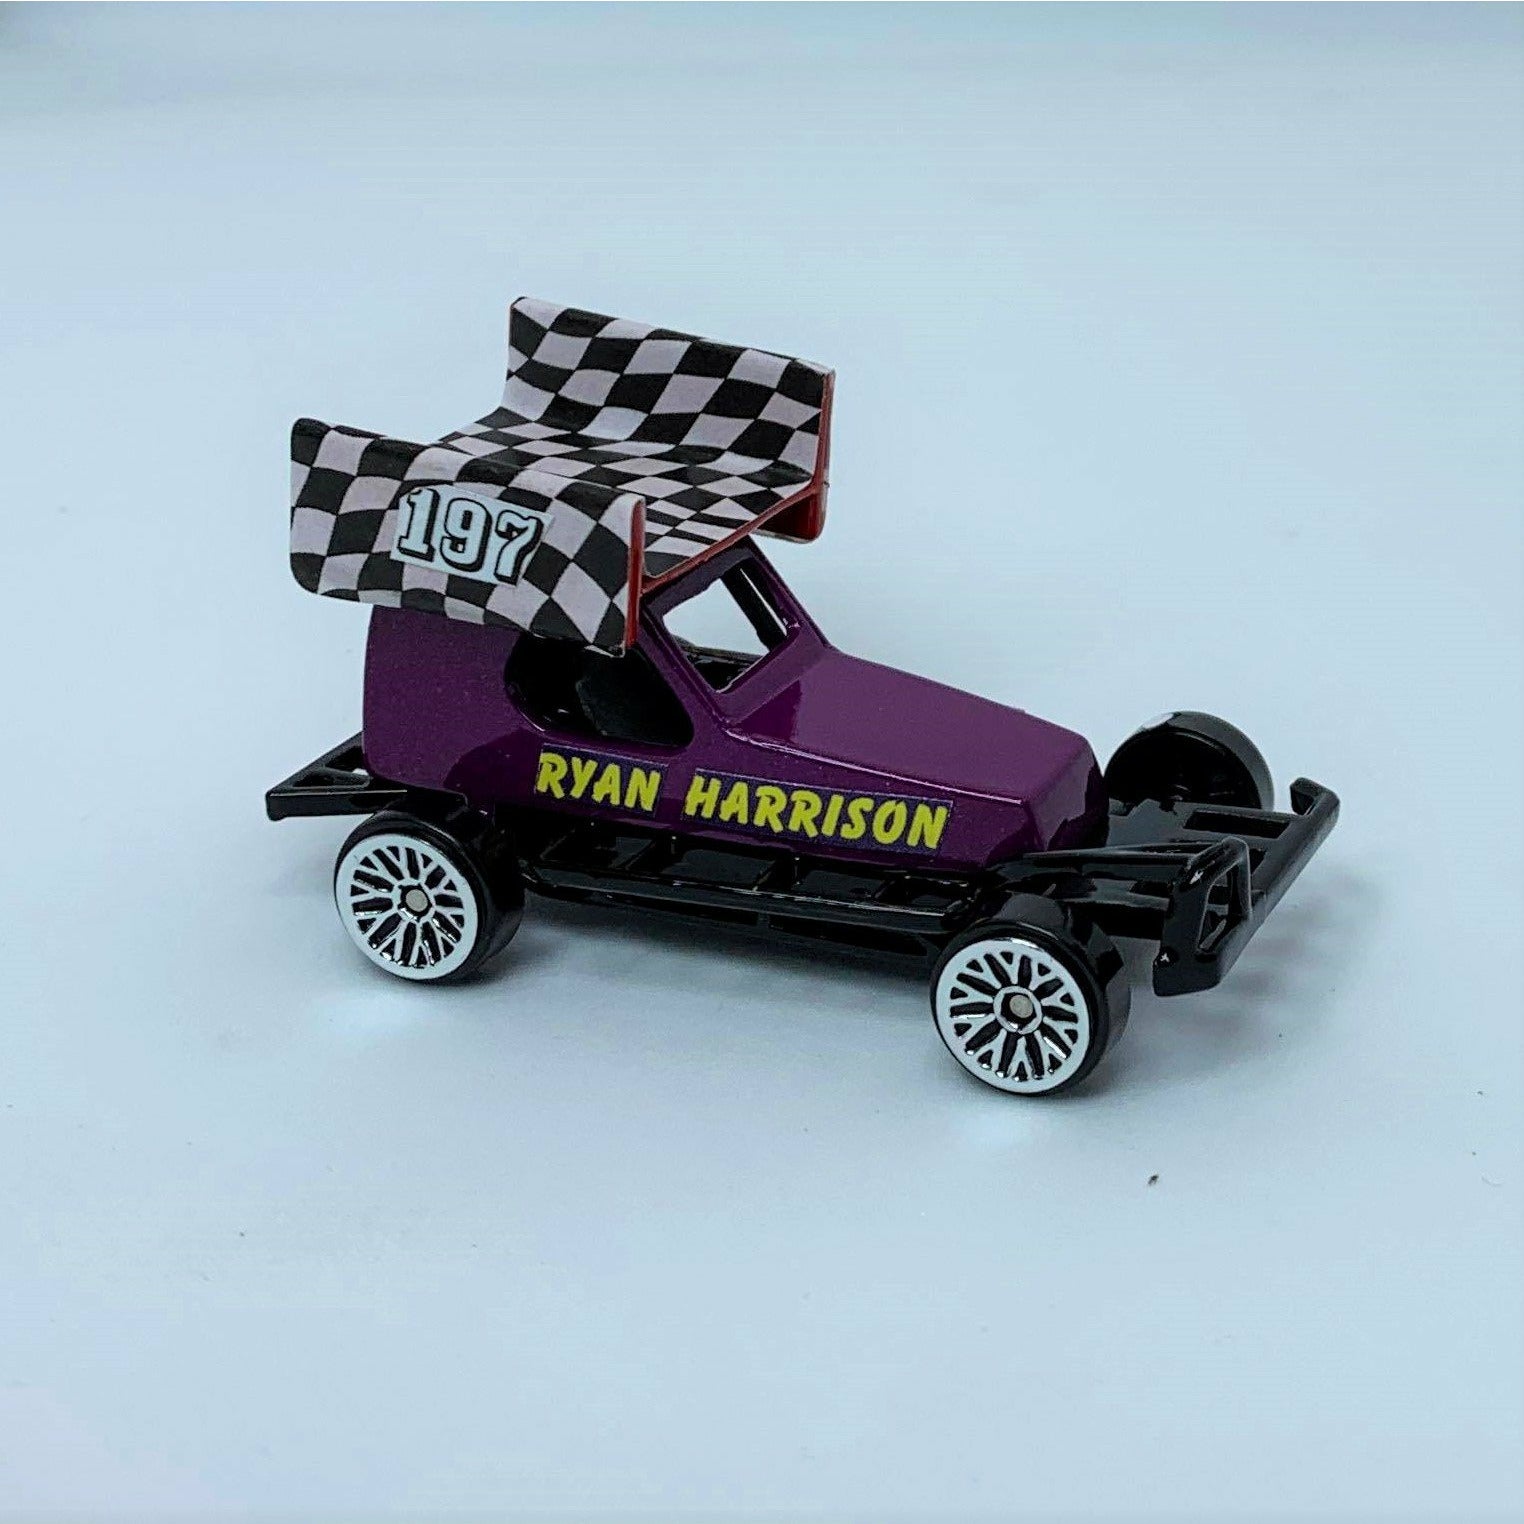 #197 Ryan Harrison - British Roof - Stock Car & Banger Toy Tracks